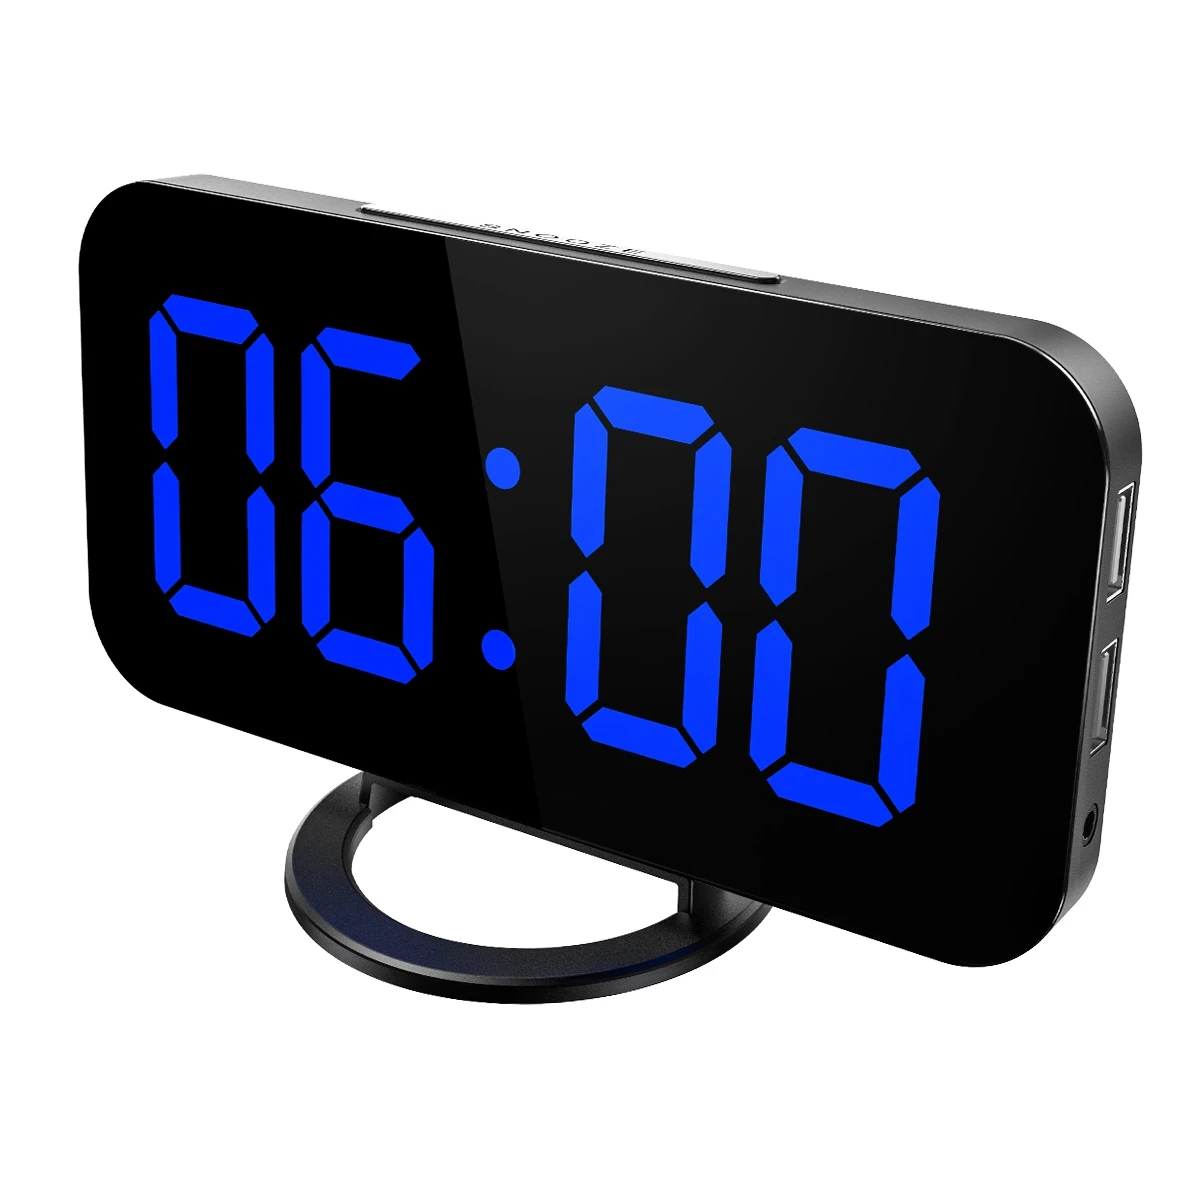 

ORIA Digital Alarm Clock LED Mirror Alarm Clock Large Display LED Clock Snooze Dual USB Charging Ports 3 Adjustable Brightness